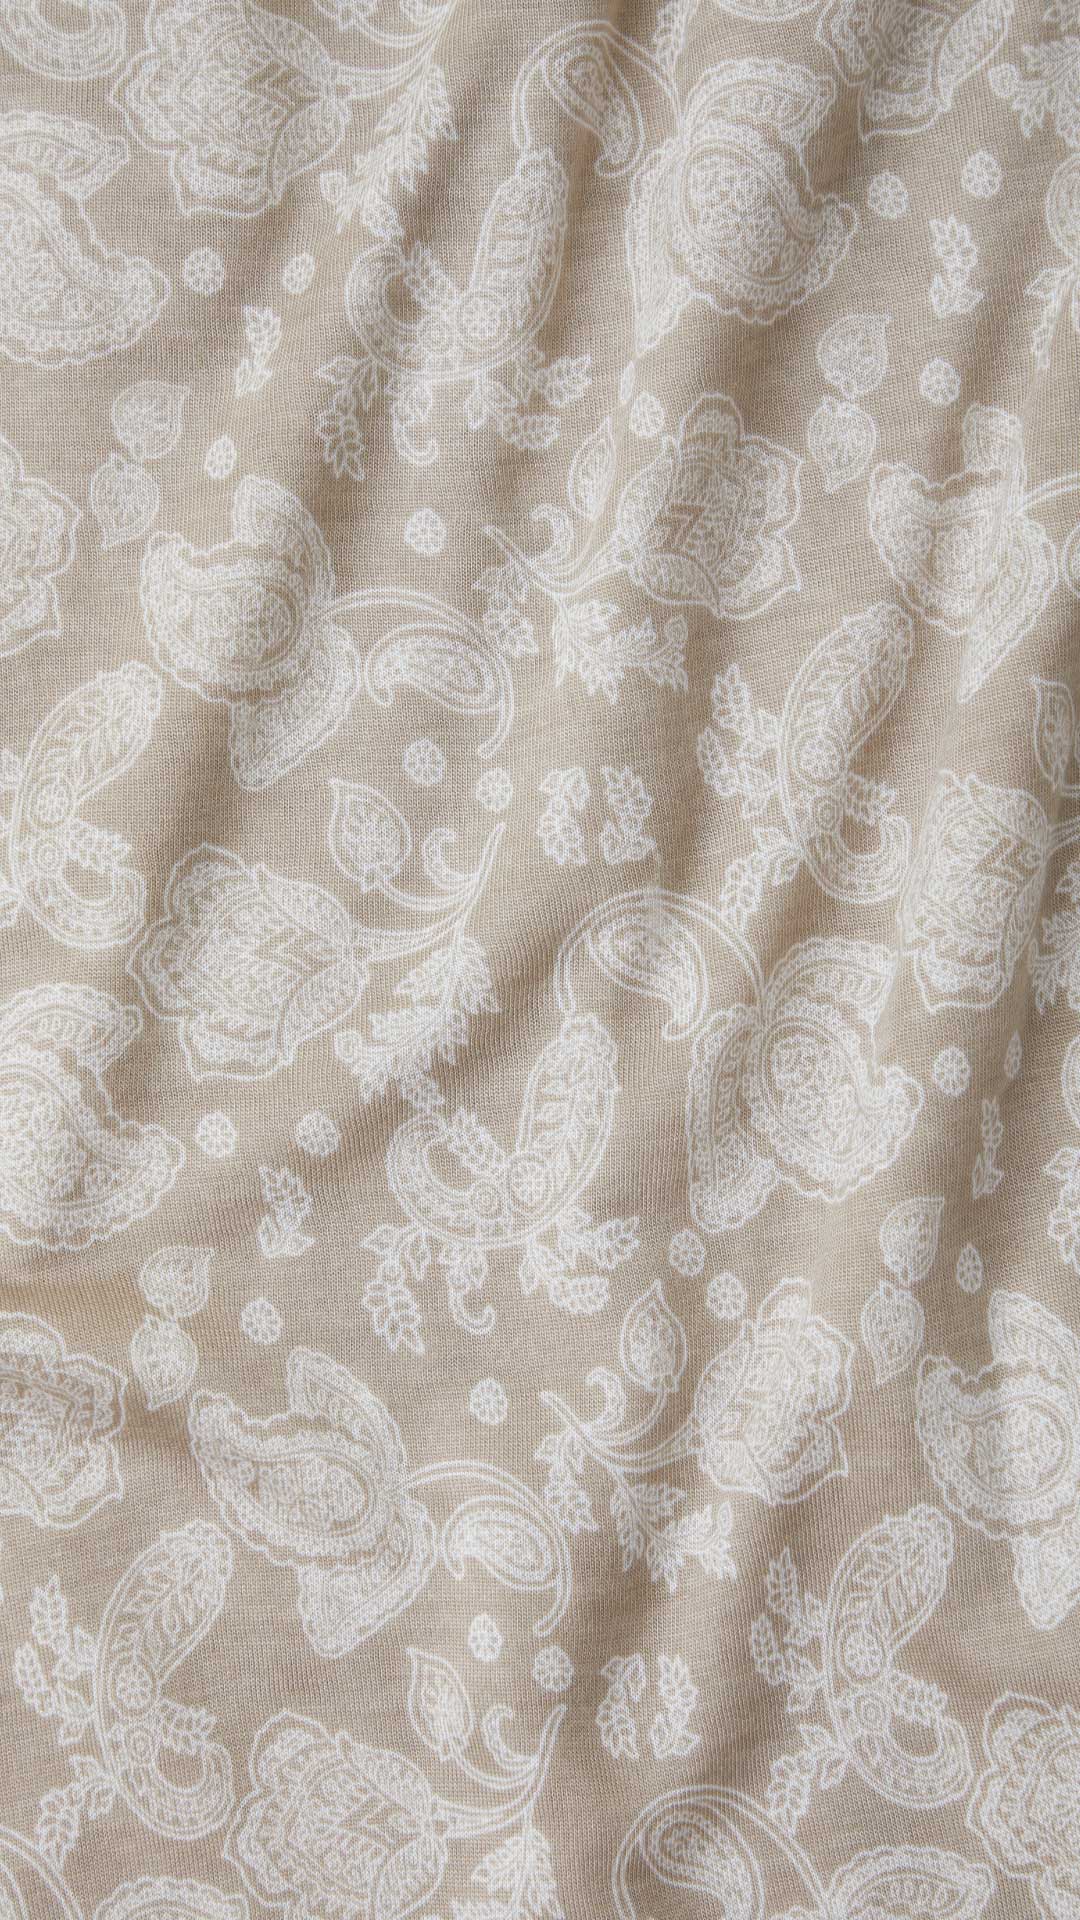 Close up image of Highland Lace print